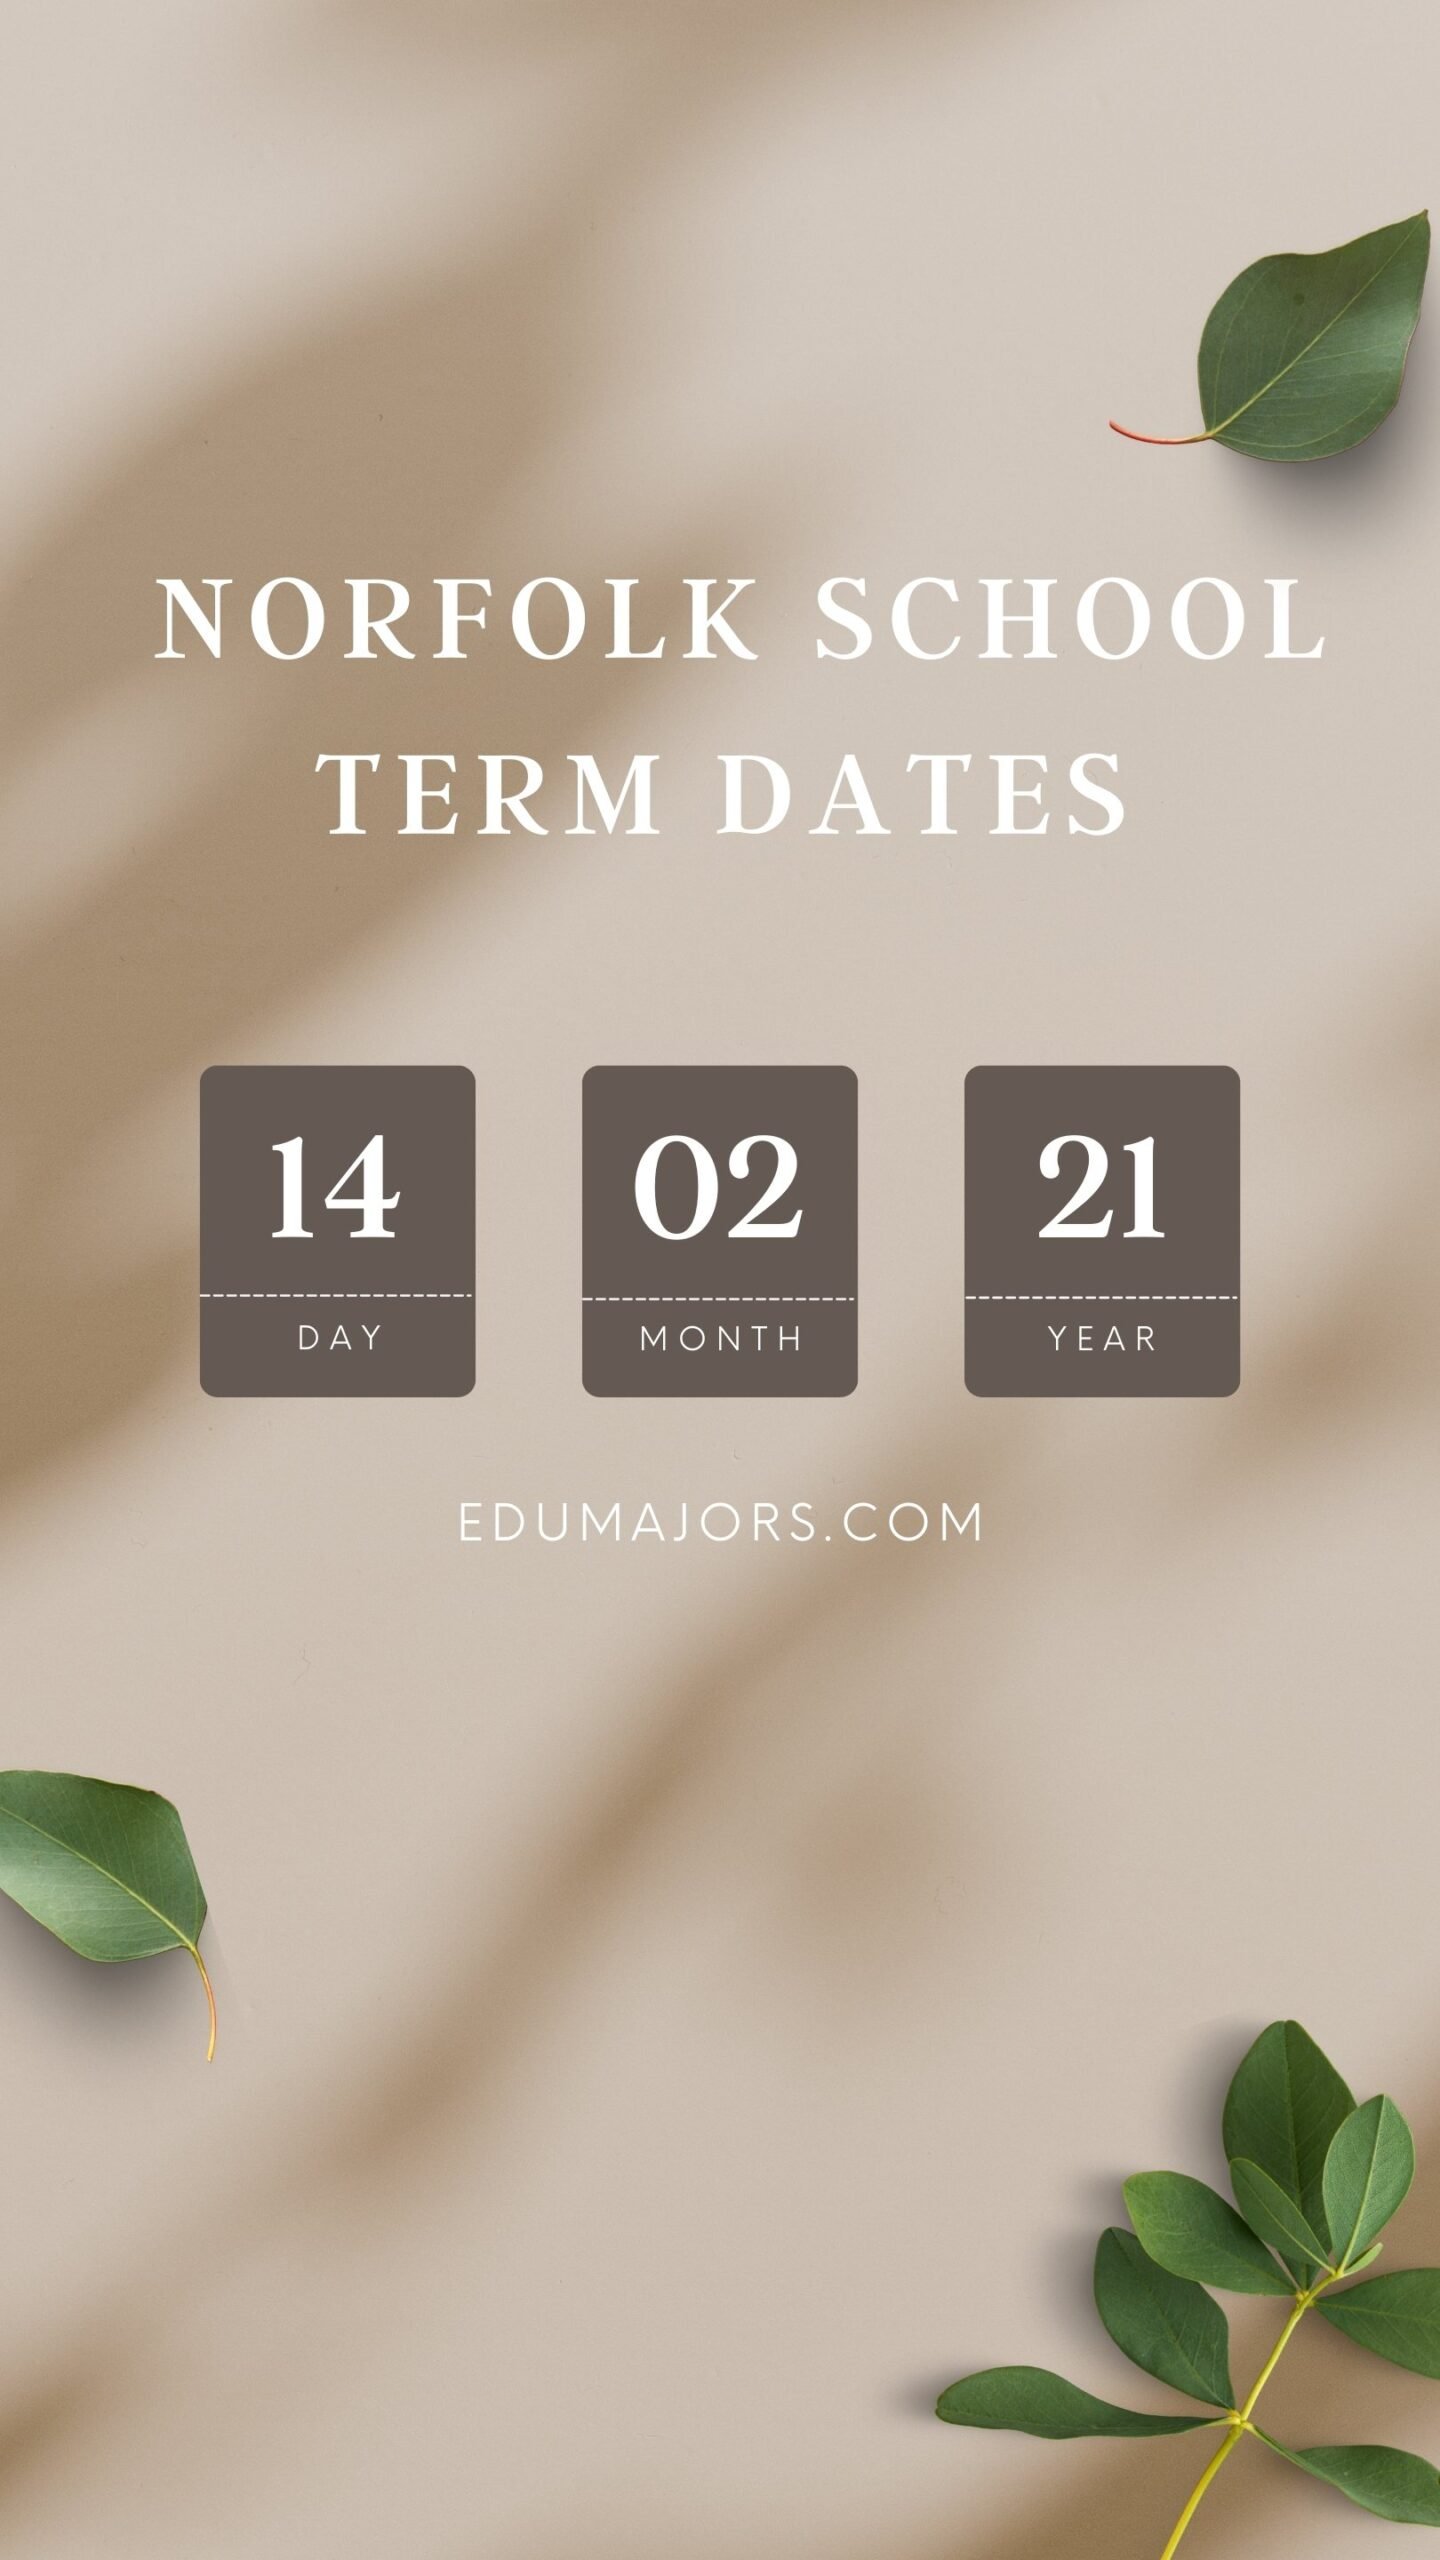  Norfolk School Term Dates